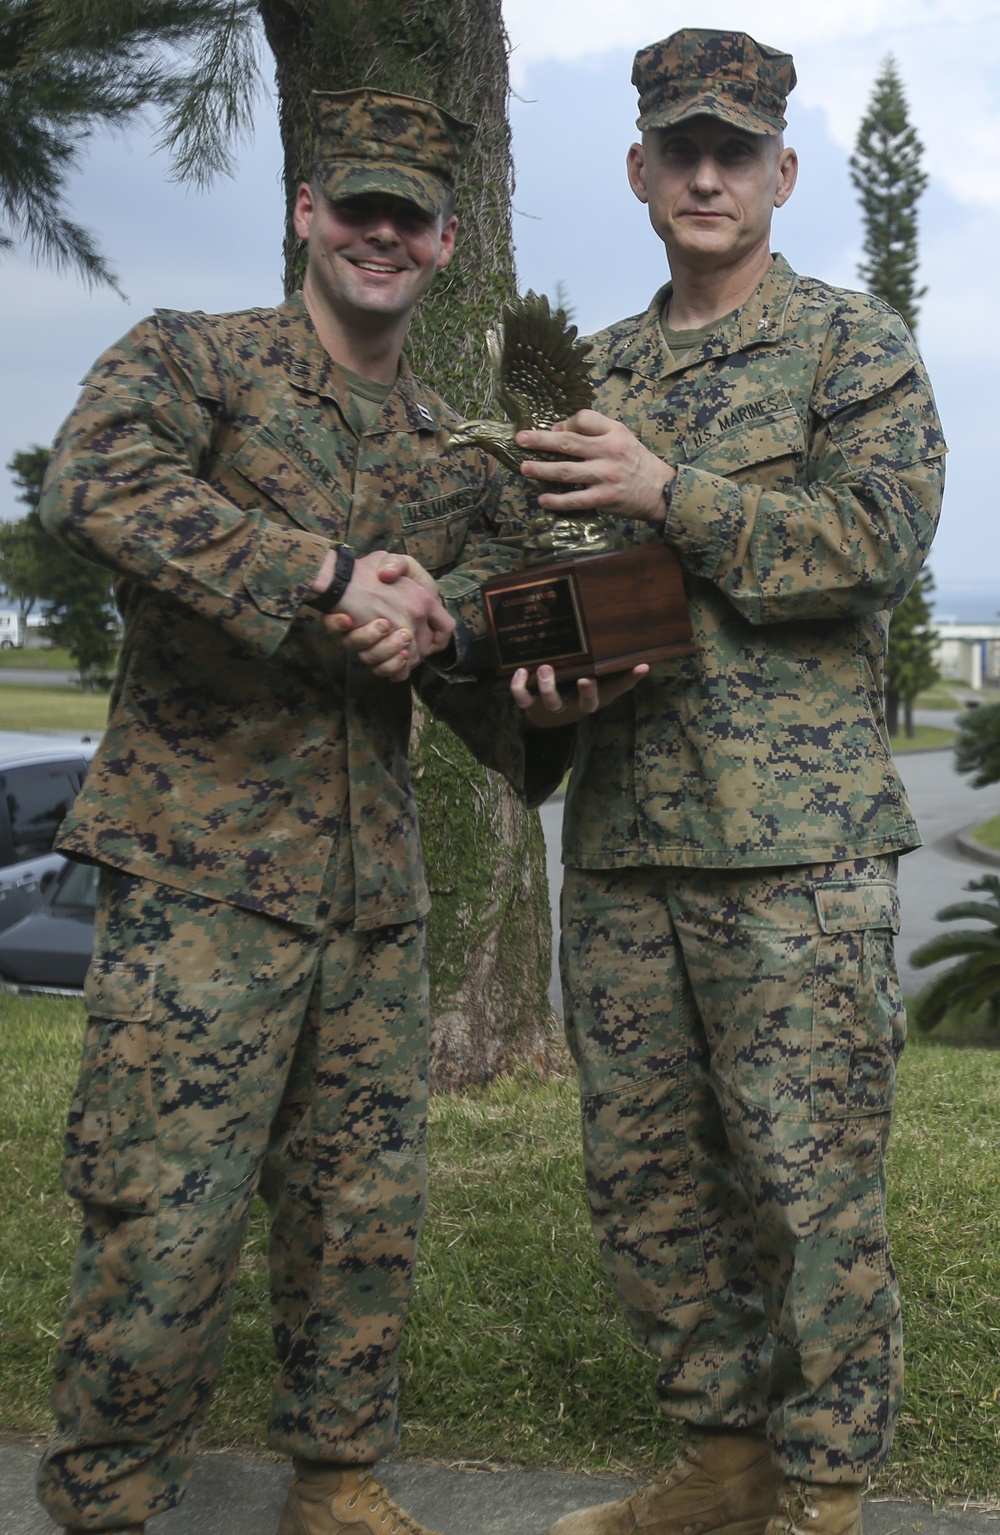 Navy and Marine Association Leadership Award